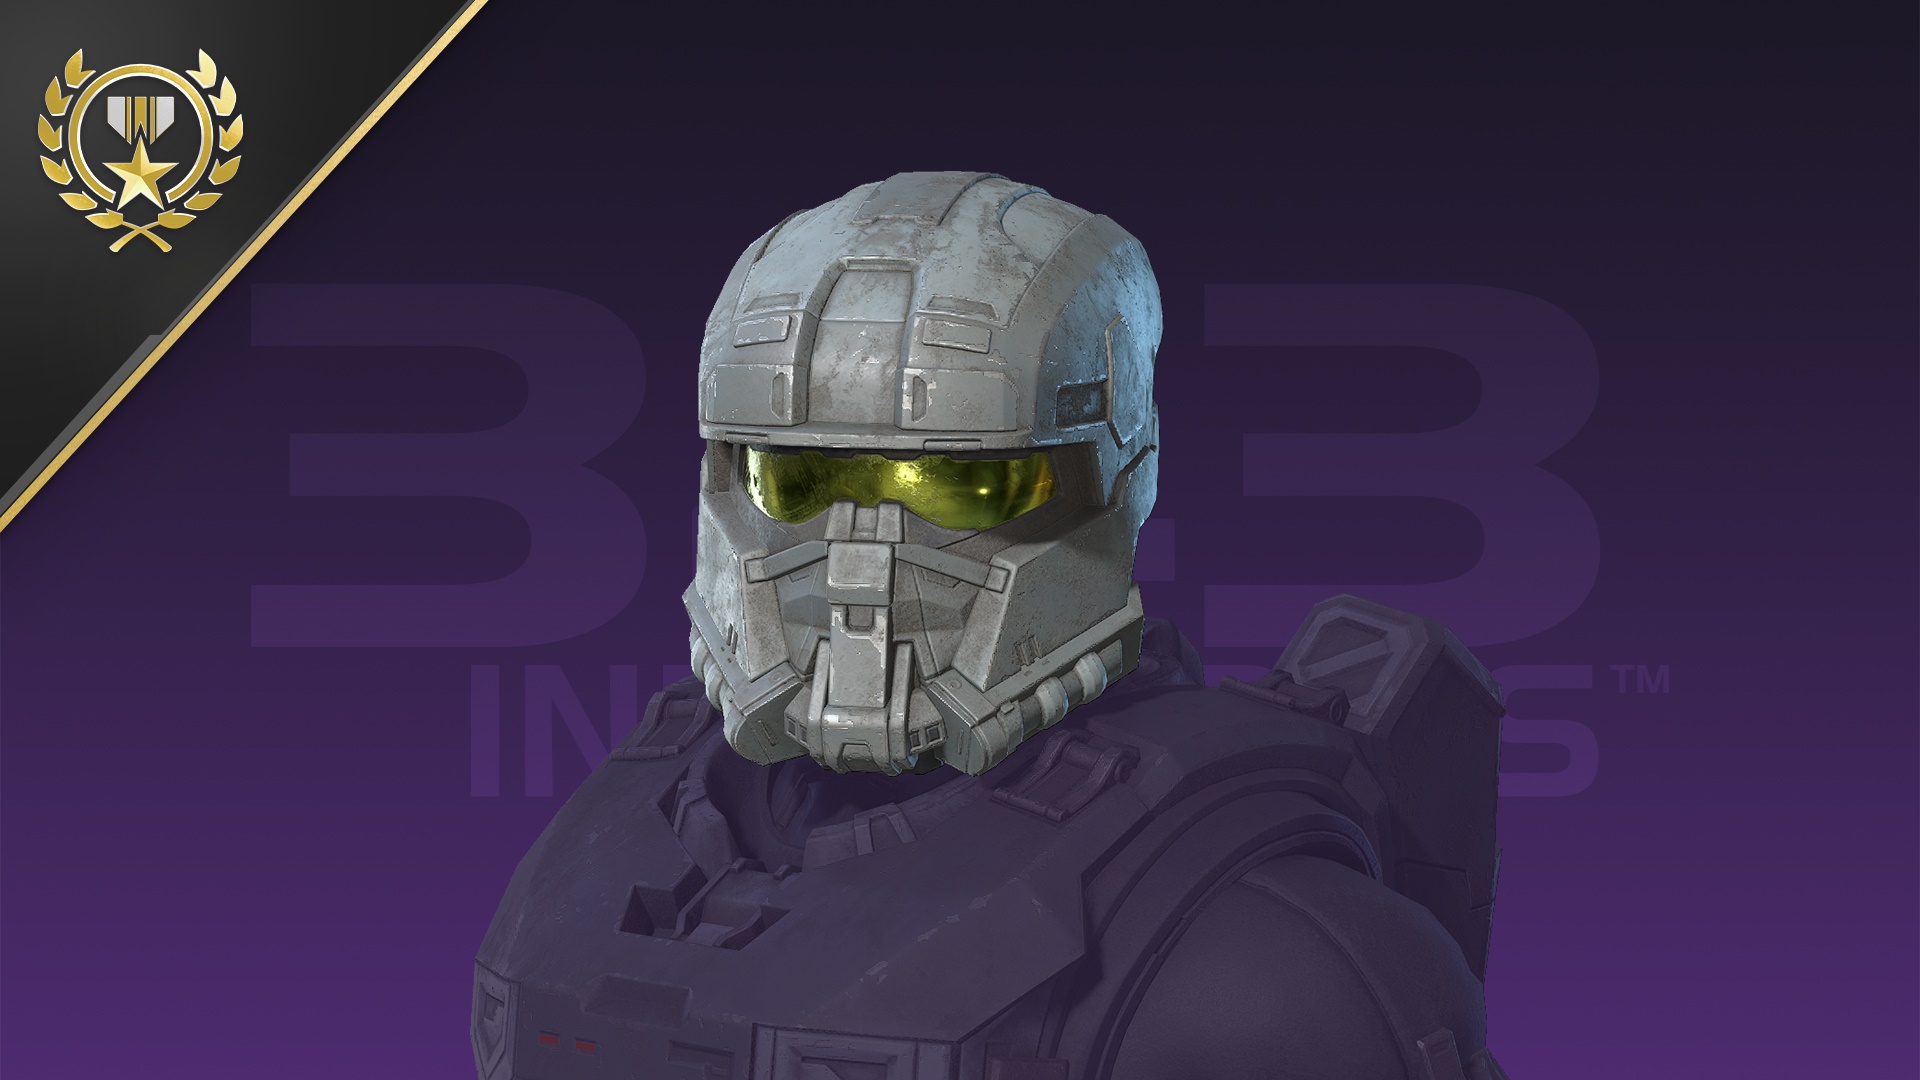 Halo Infinite image of Vannak-134's helmet